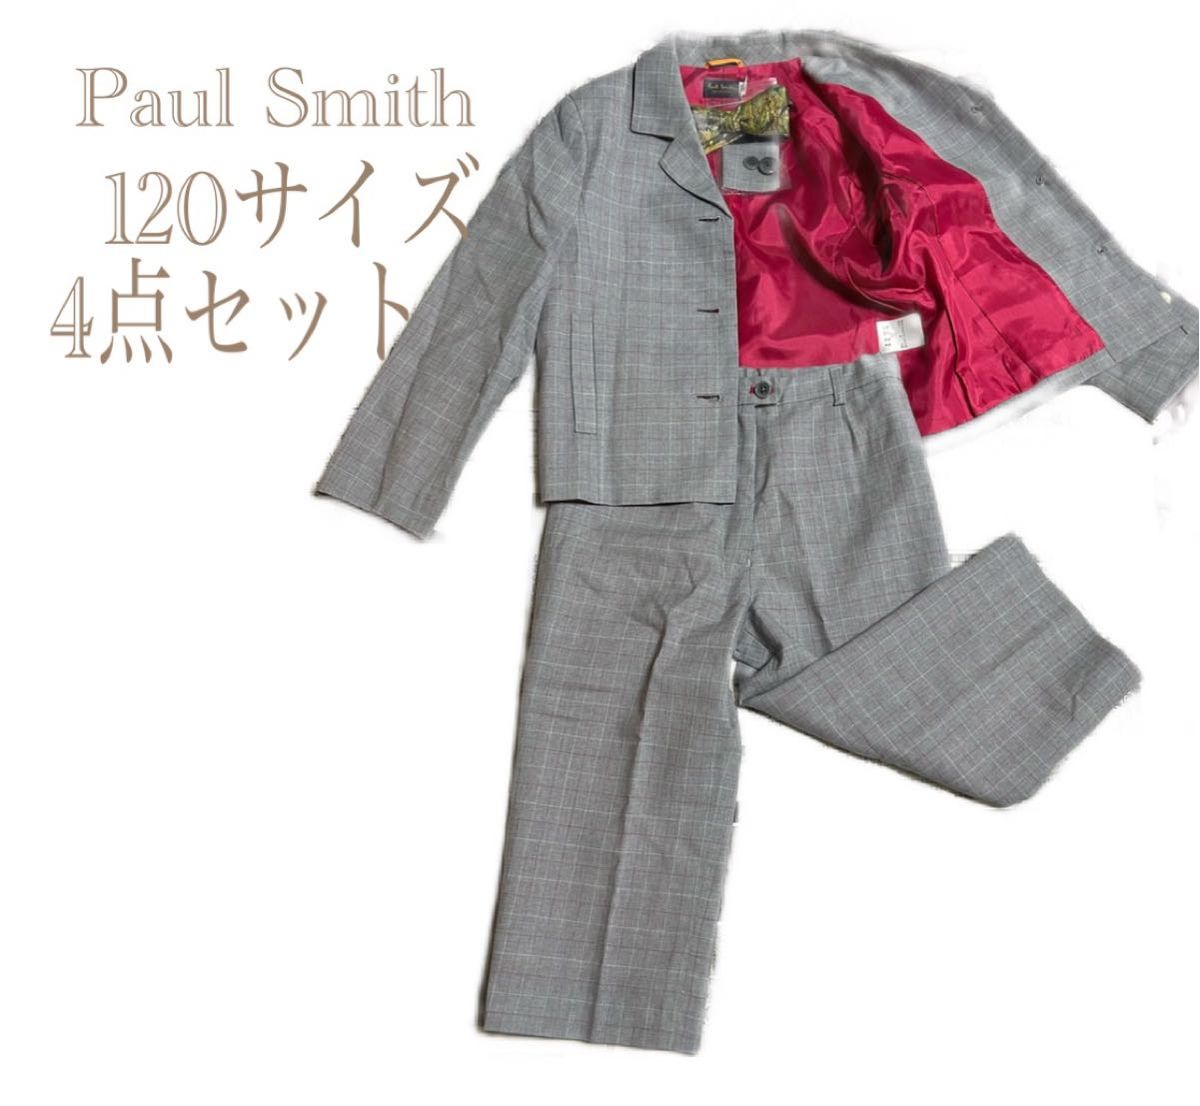 Paul Smith FOR CHILDREN キッズ 120サイズ 4点セット!! スーツ上下 ネクタイ シャツ ポールスミス